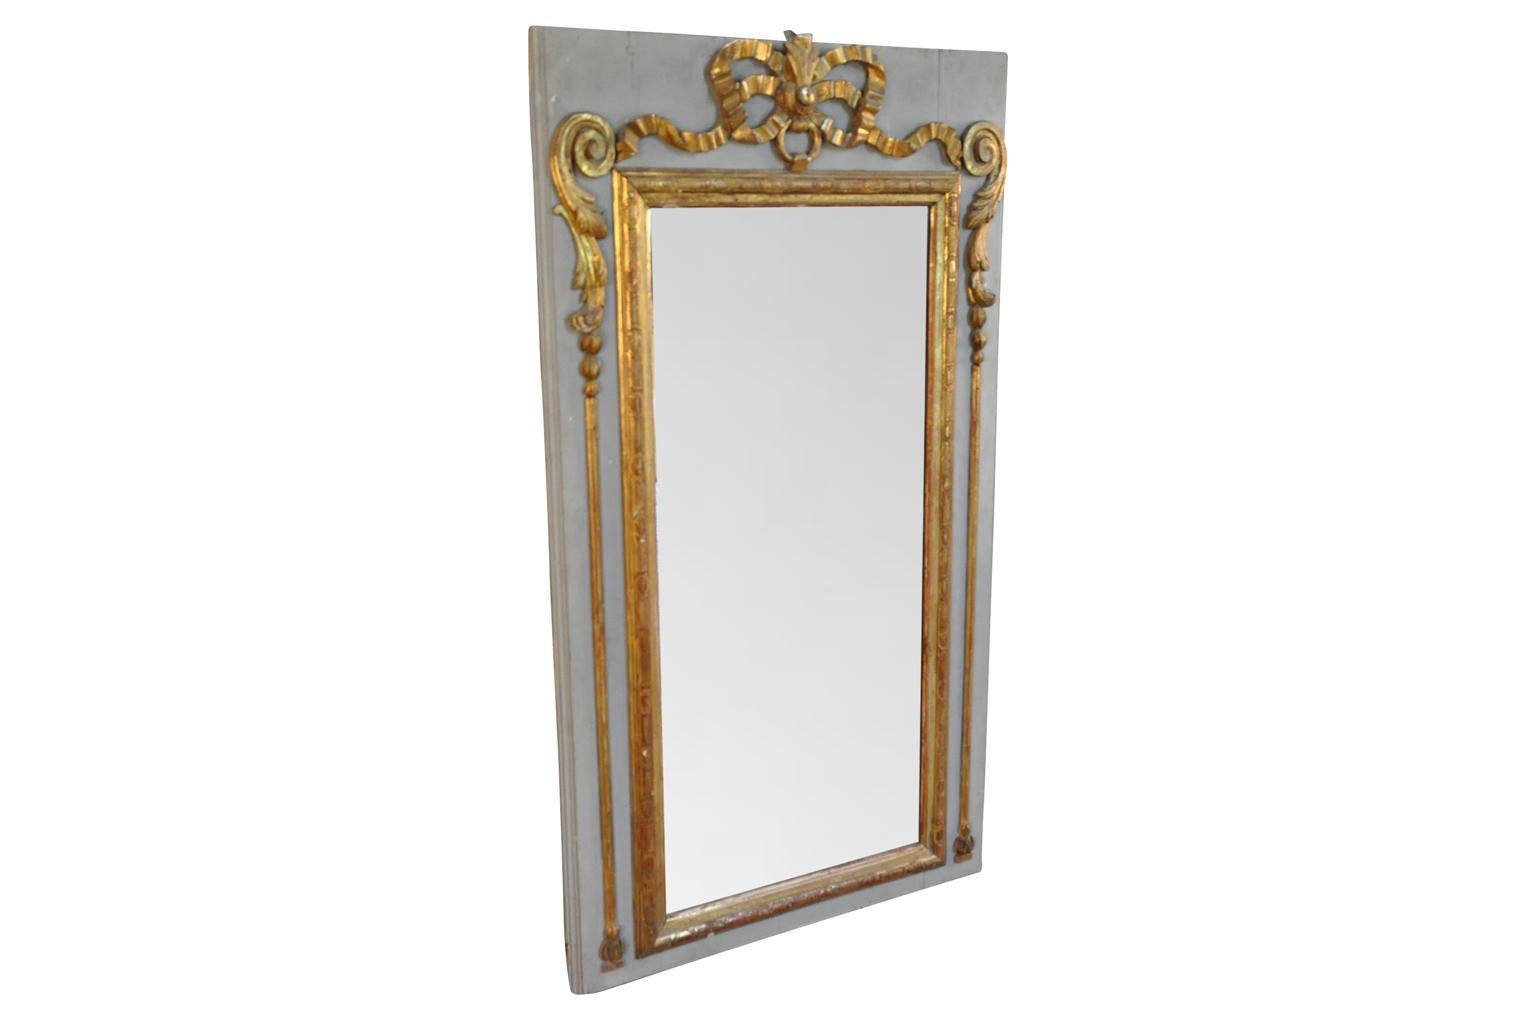 Polychromed 18th Century French Louis XVI Period Trumeau Mirror